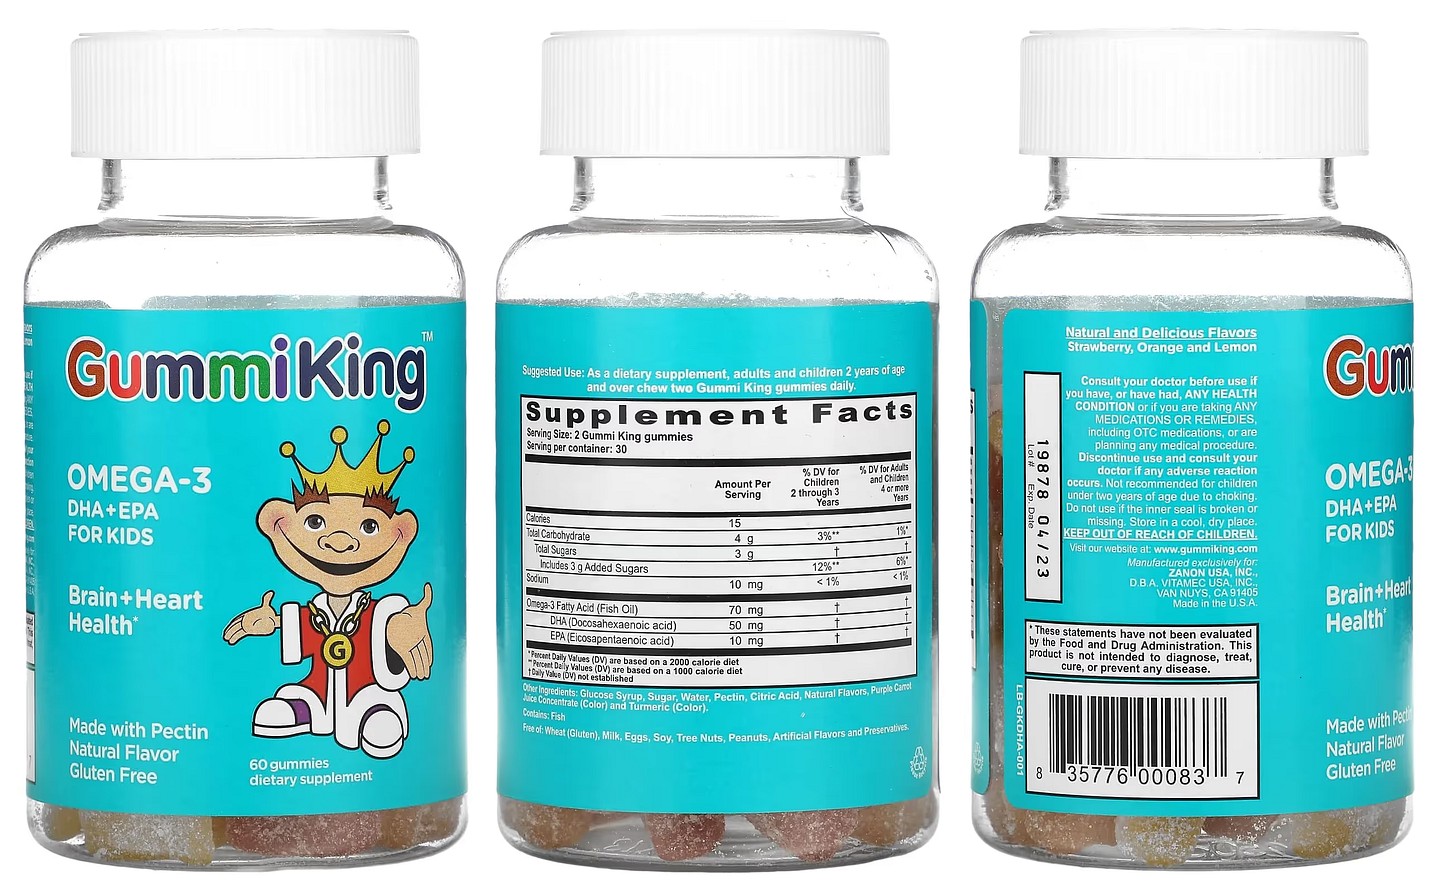 GummiKing, Omega-3 DHA + EPA for Kids packaging